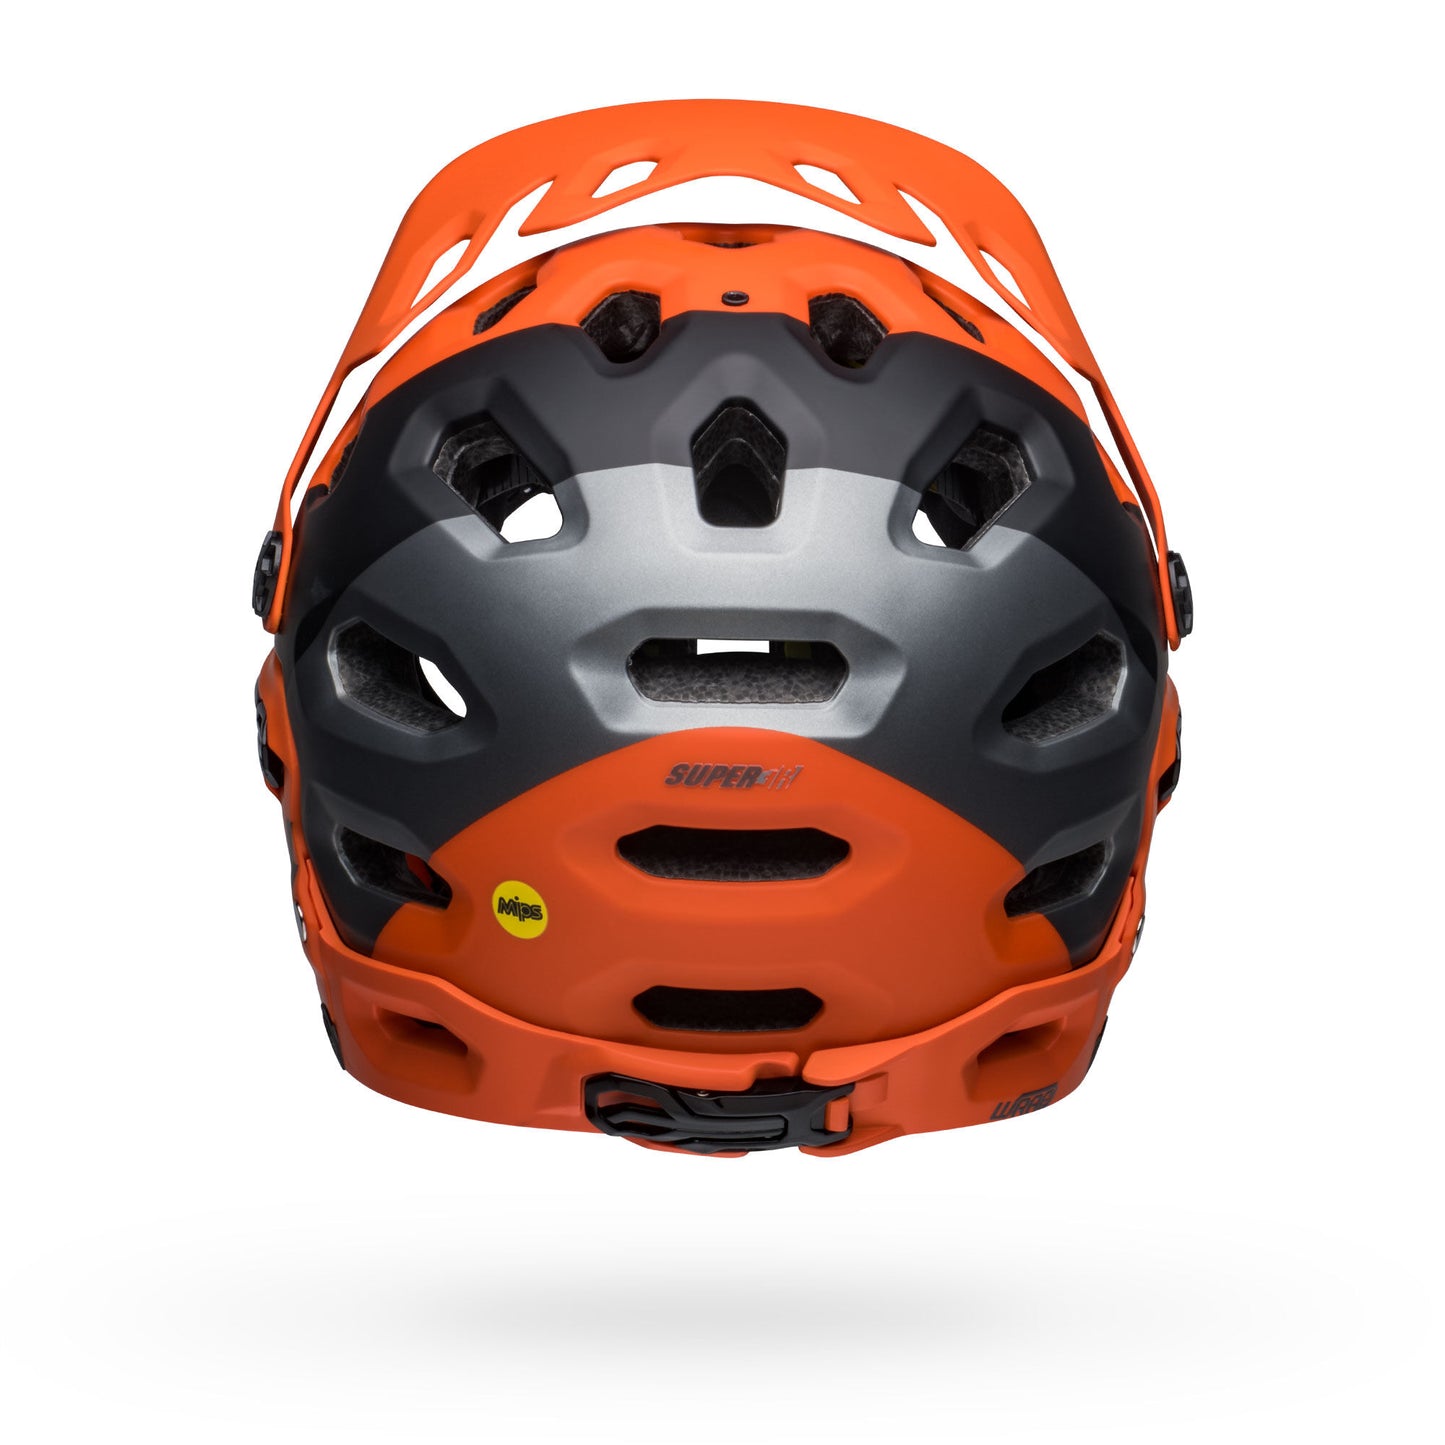 Bell Super 3R MIPS Helmet Matte Orange Black Bike Helmets